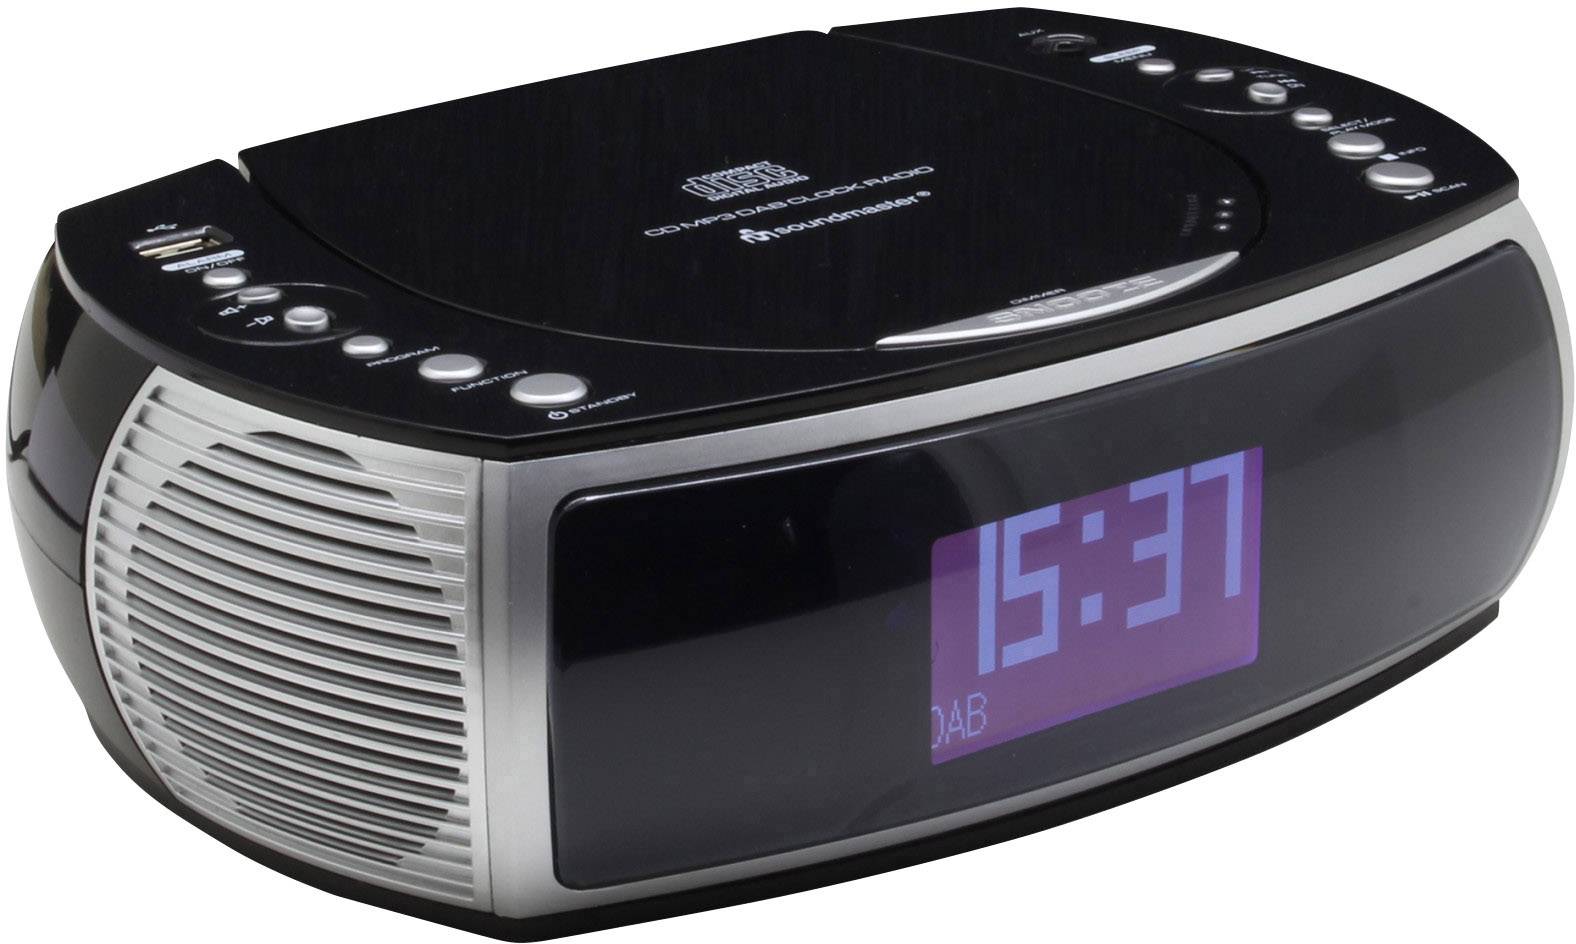 Reciteren Beroep kapperszaak soundmaster URD470SW Radio alarm clock DAB+, FM AUX, CD, USB Black |  Conrad.com